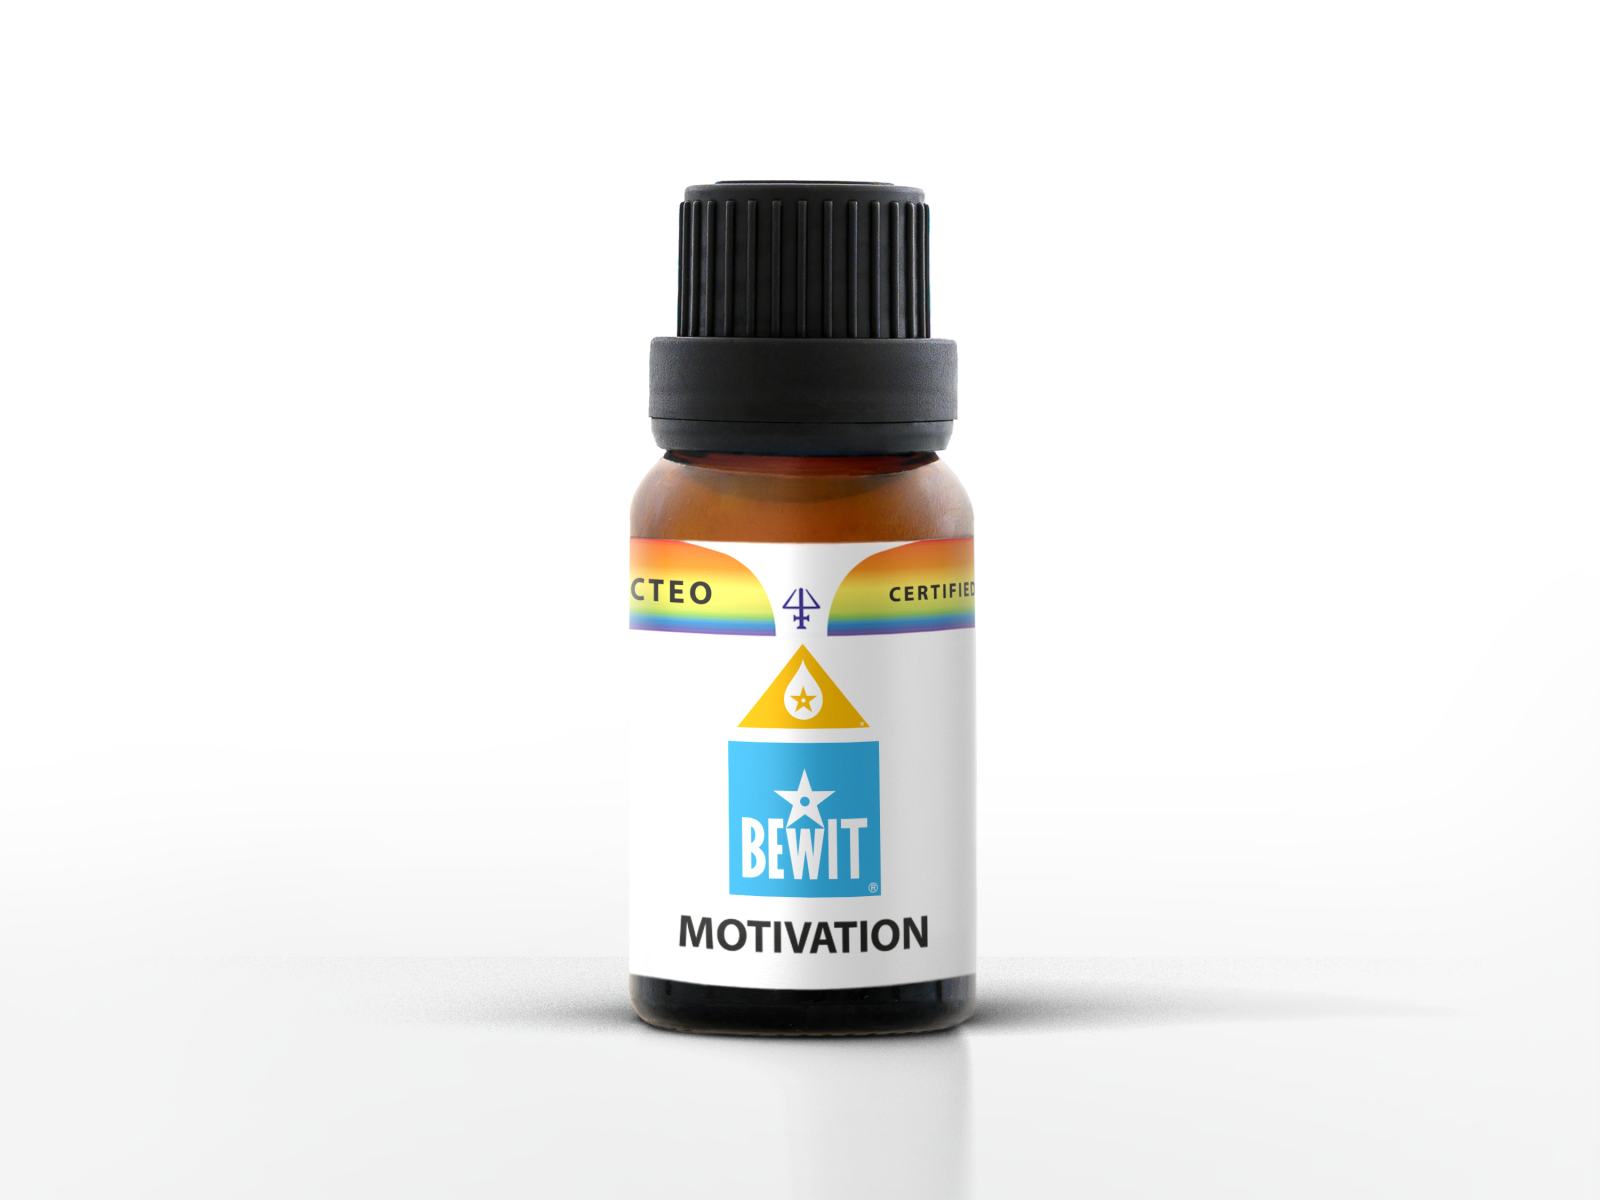 BEWIT Motivation - 100% natural blend of CTEO® essential oils - 1